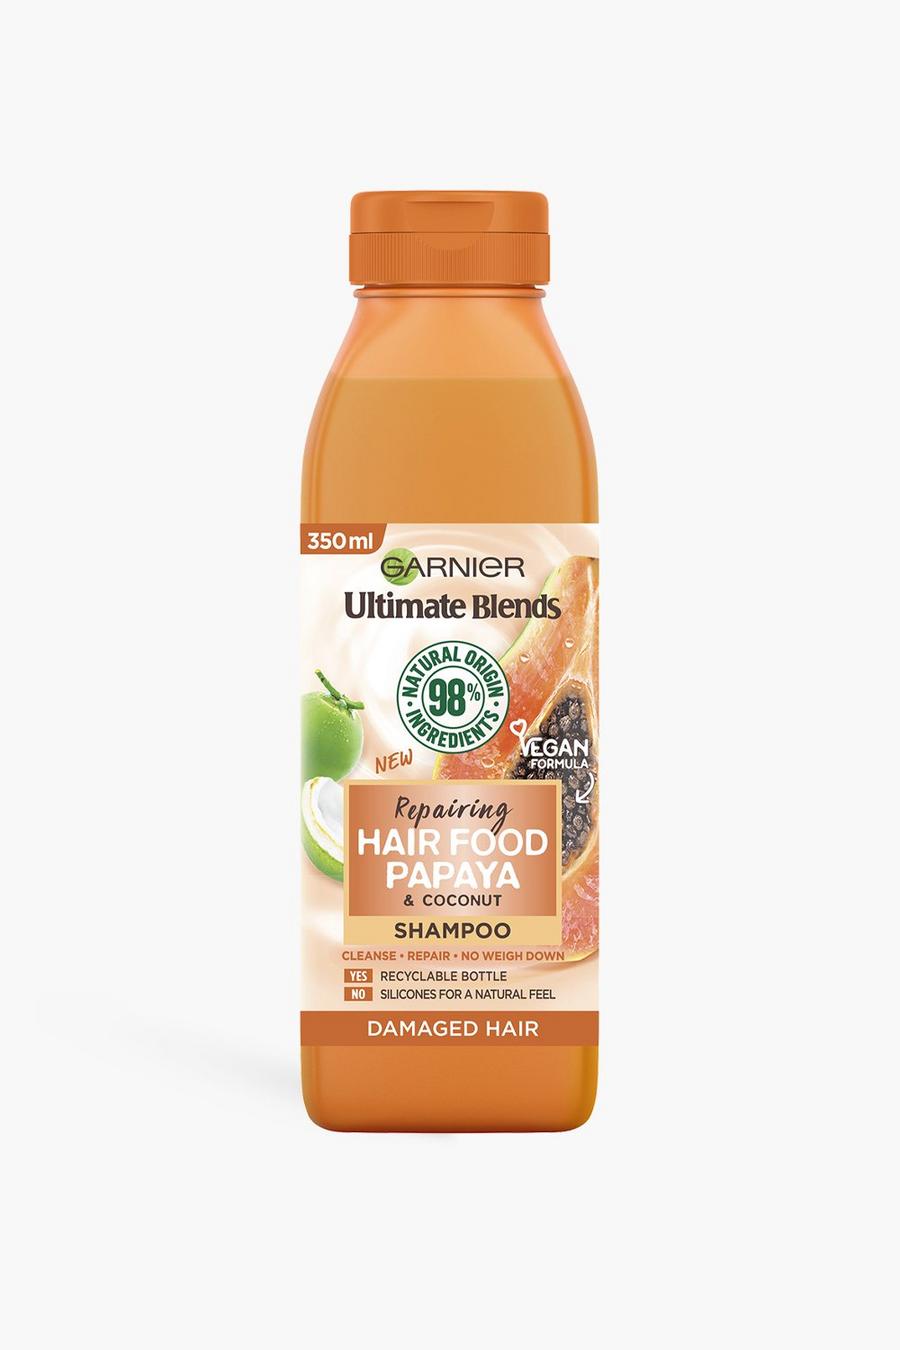 Orange arancio Garnier Ultimate Blends Repairing Hair Food Papaya Shampoo For Damaged Hair 350ml